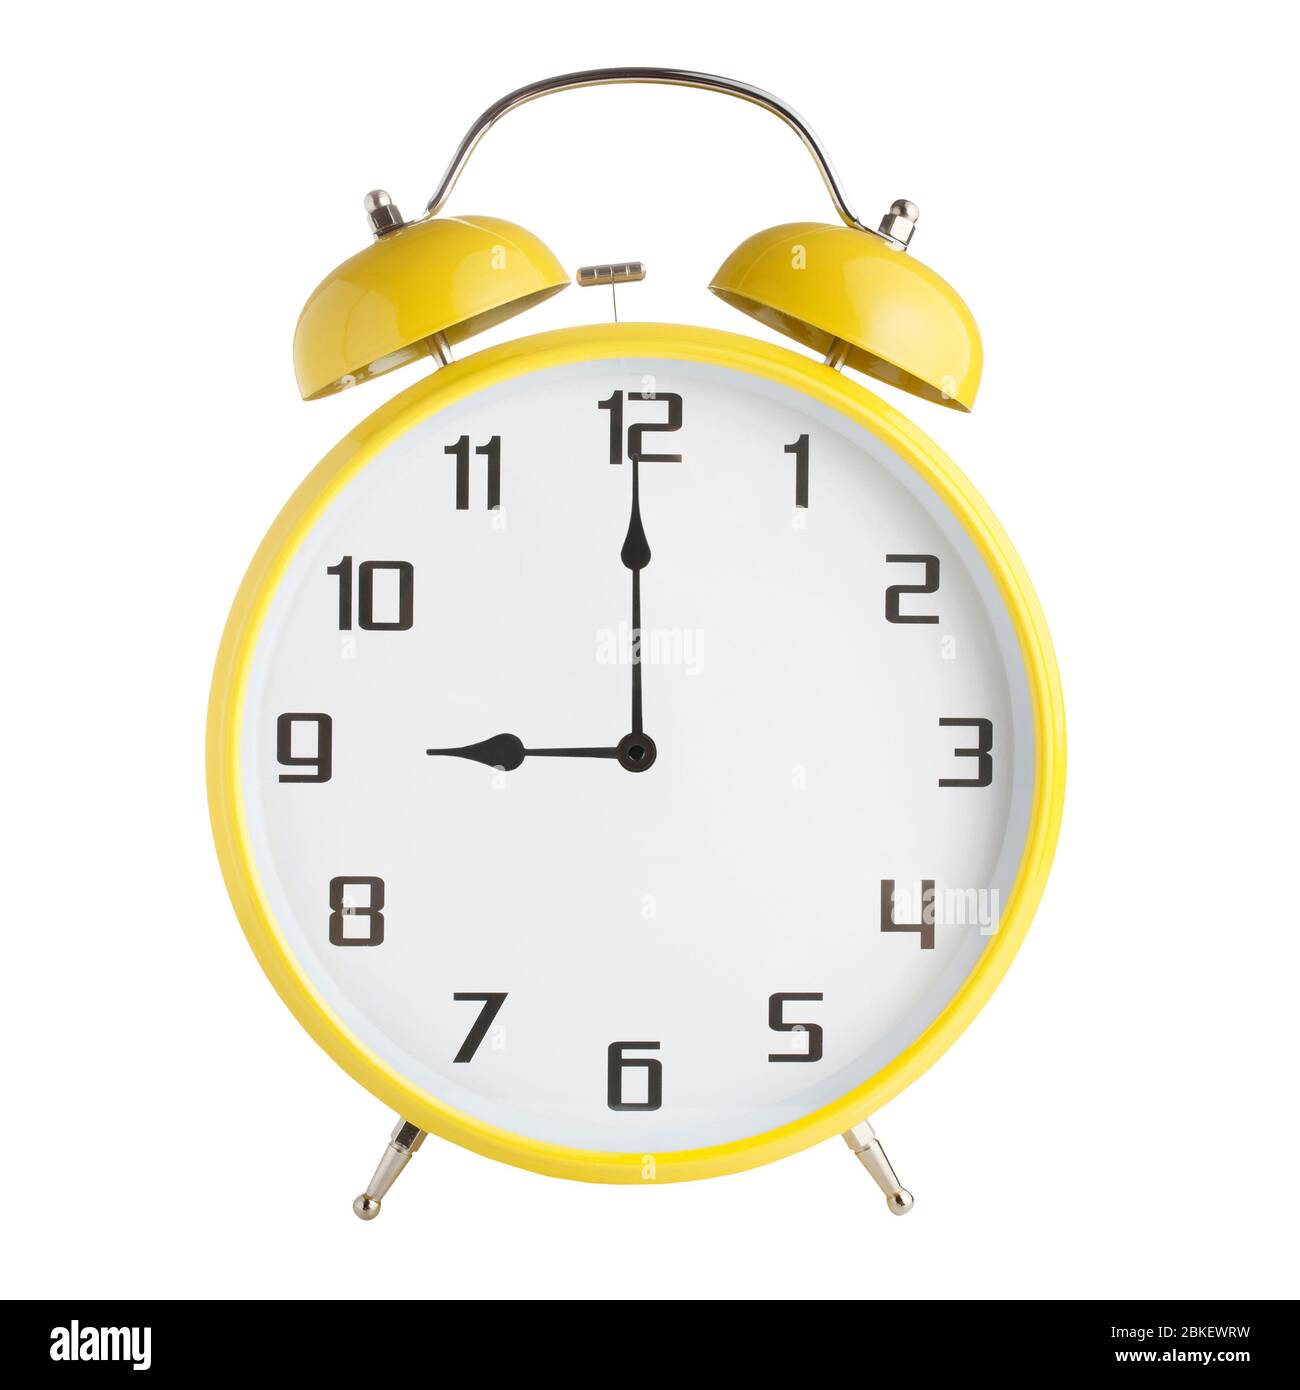 9pm clock -Fotos und -Bildmaterial in hoher Auflösung – Alamy